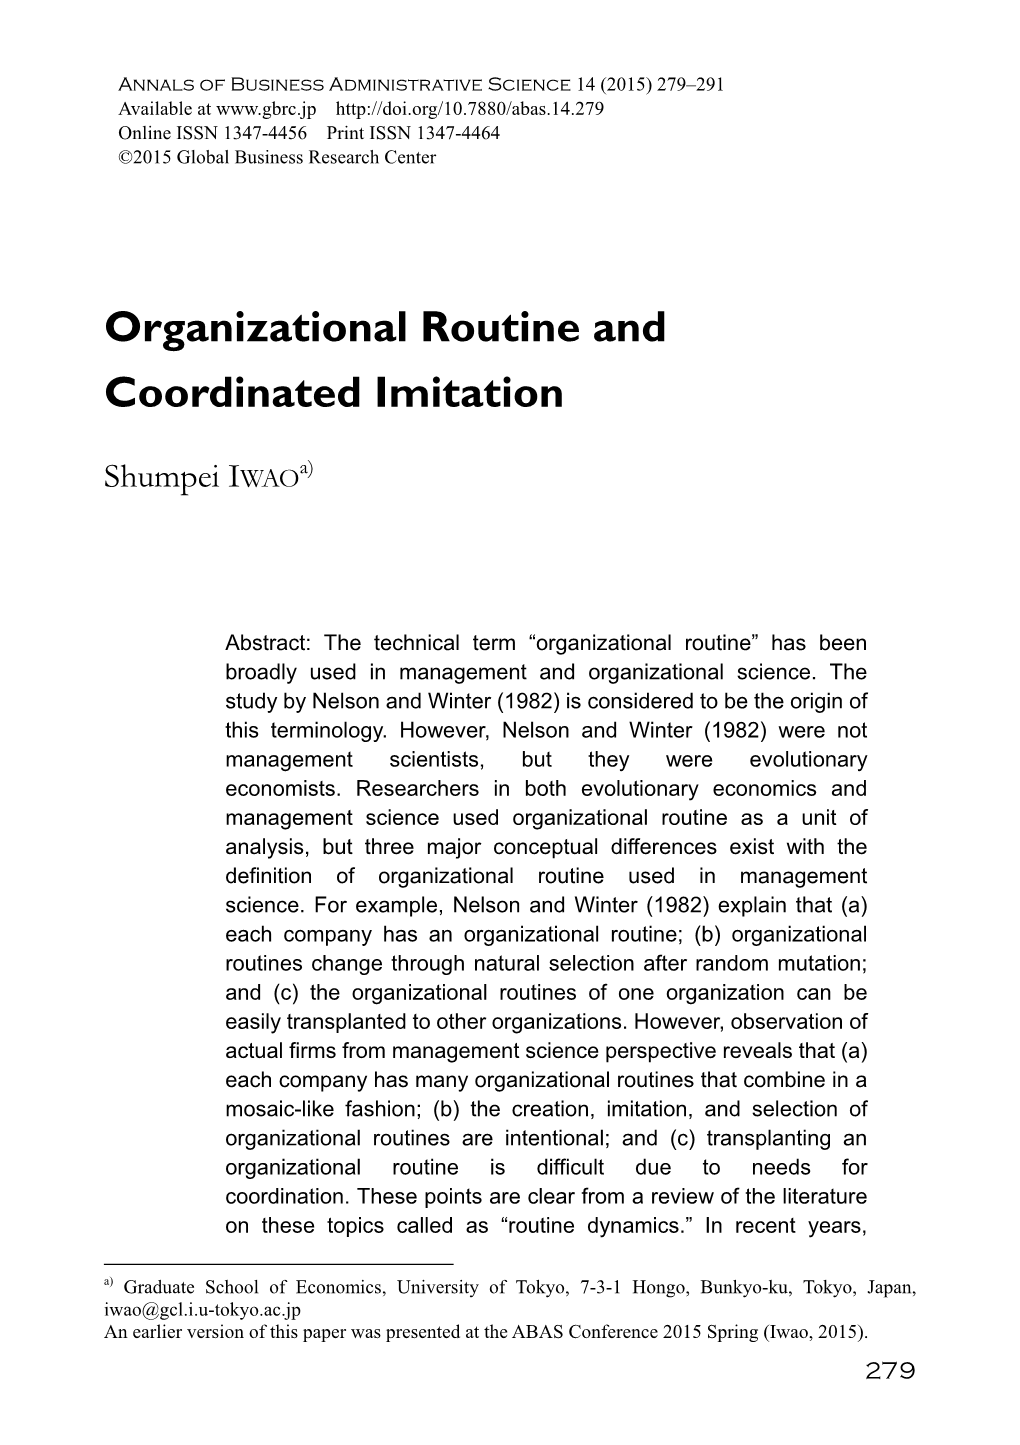 Organizational Routine and Coordinated Imitation